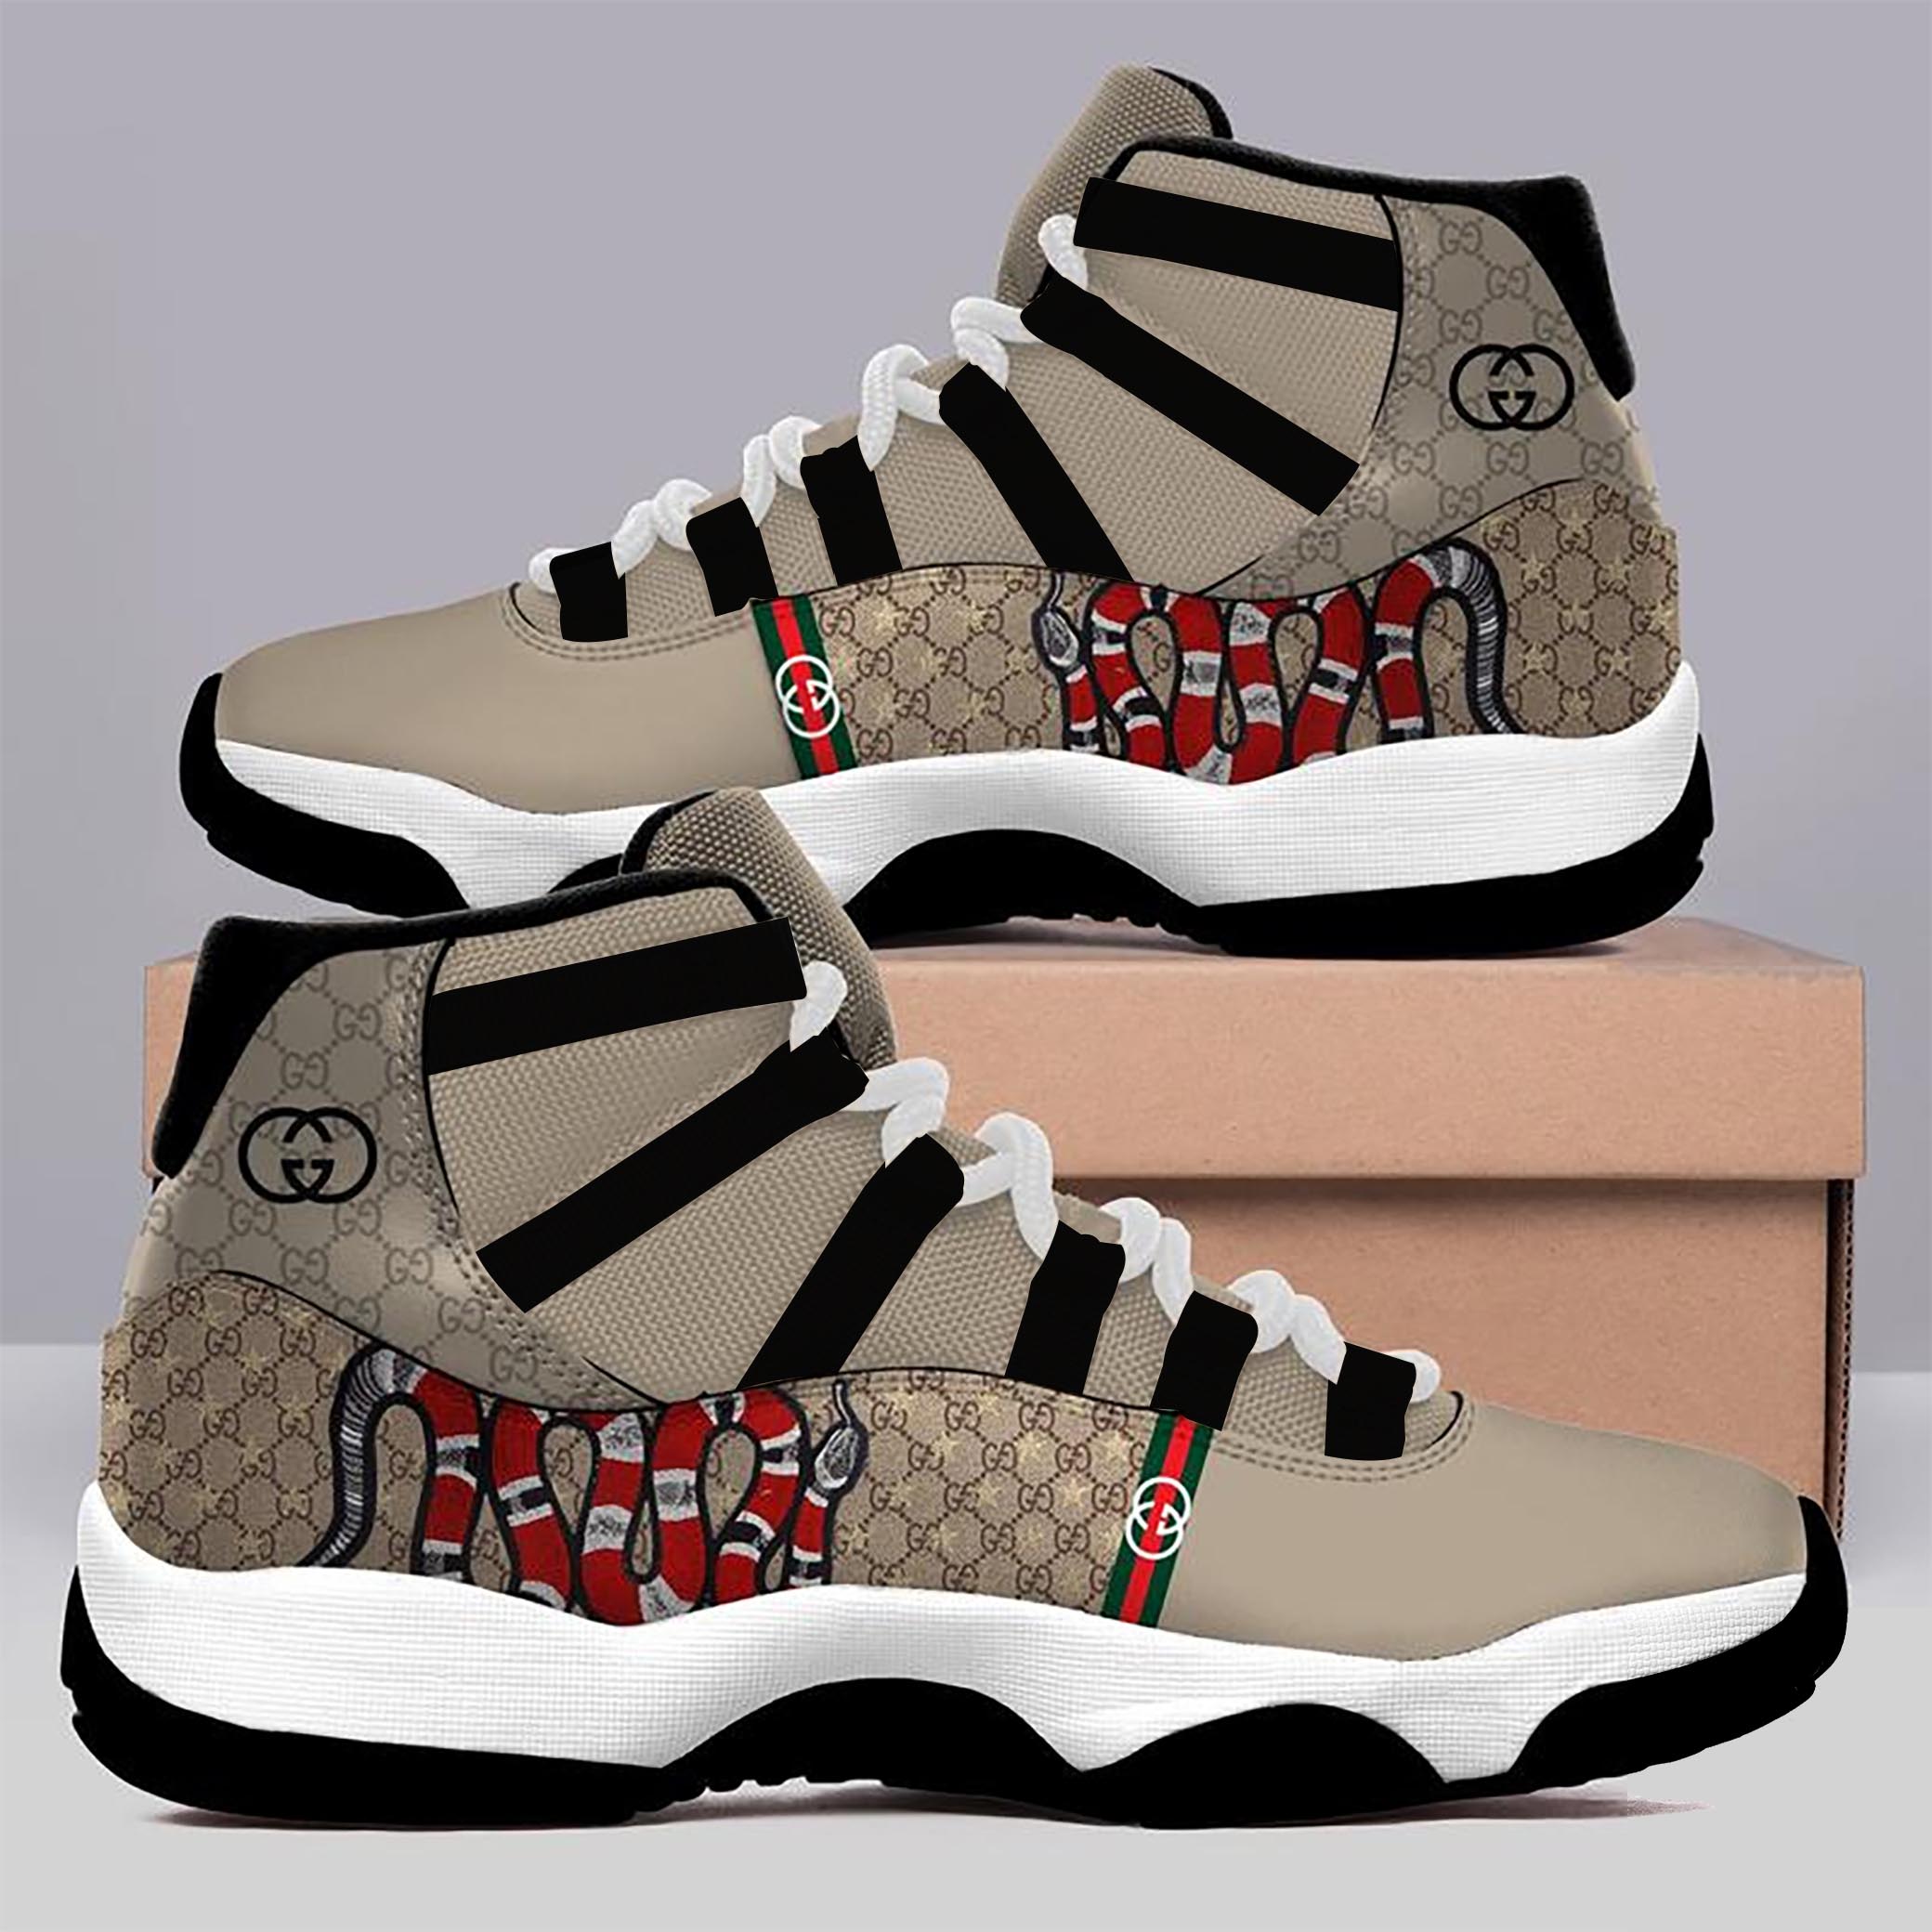 Gucci Snake Air Jordan 11 Sneakers Shoes Hot 2022 Gifts For Men Women HT